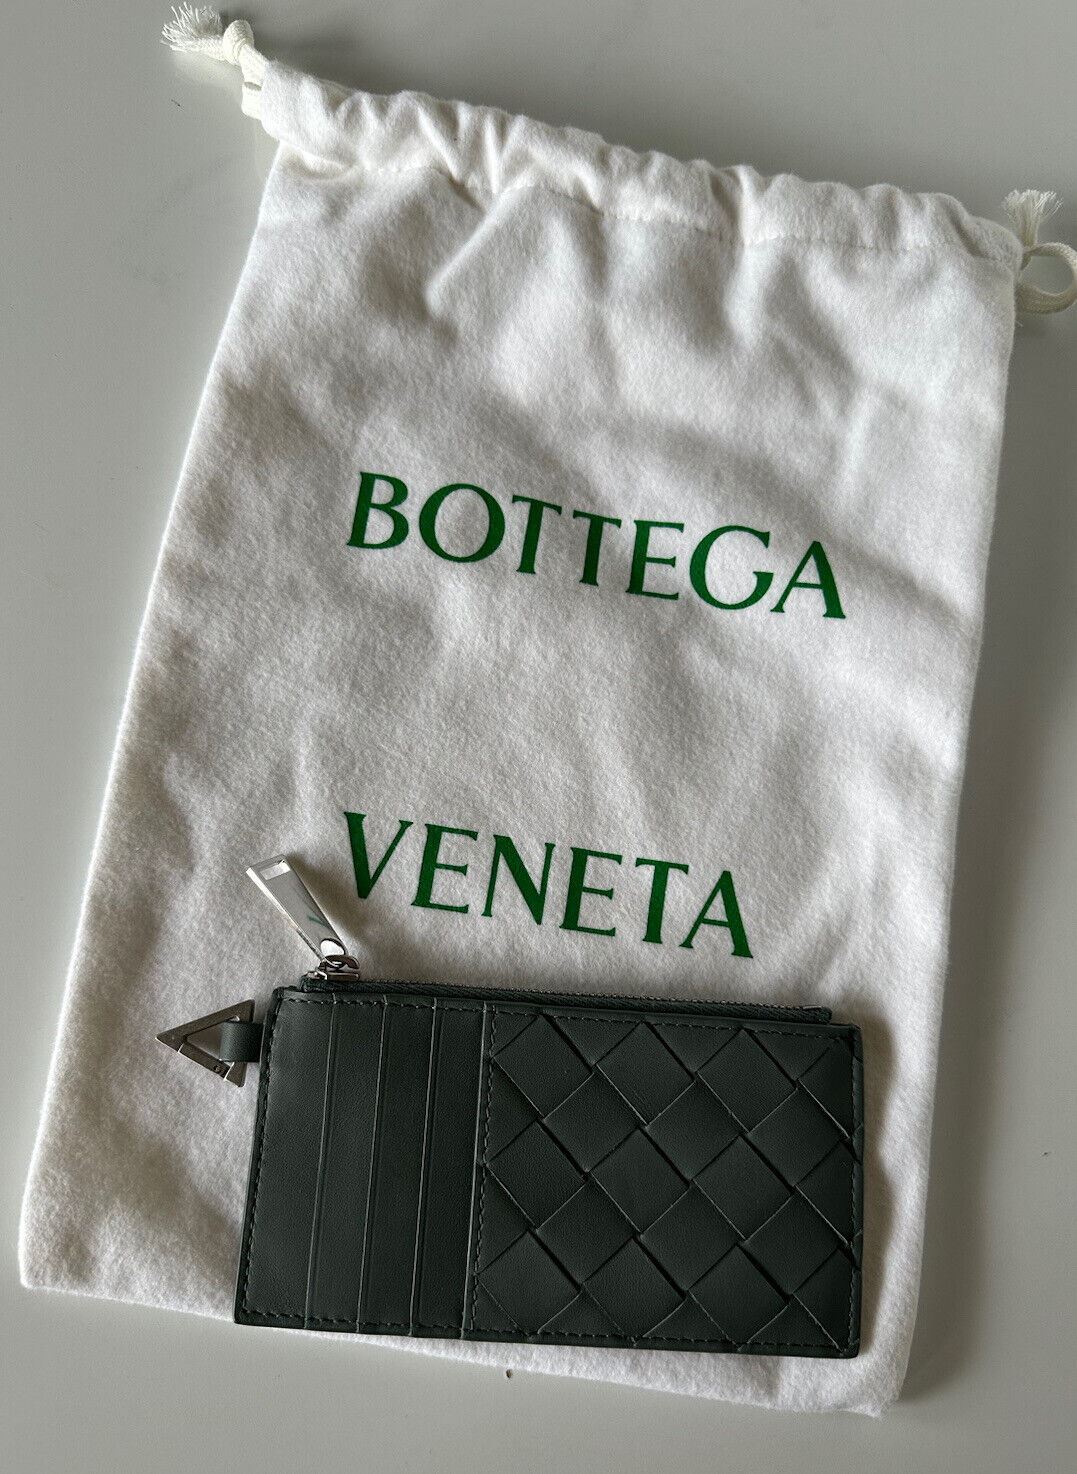 NWT $520 Bottega Veneta Leather Slim Wallet Intreccio Weave Slate 619200